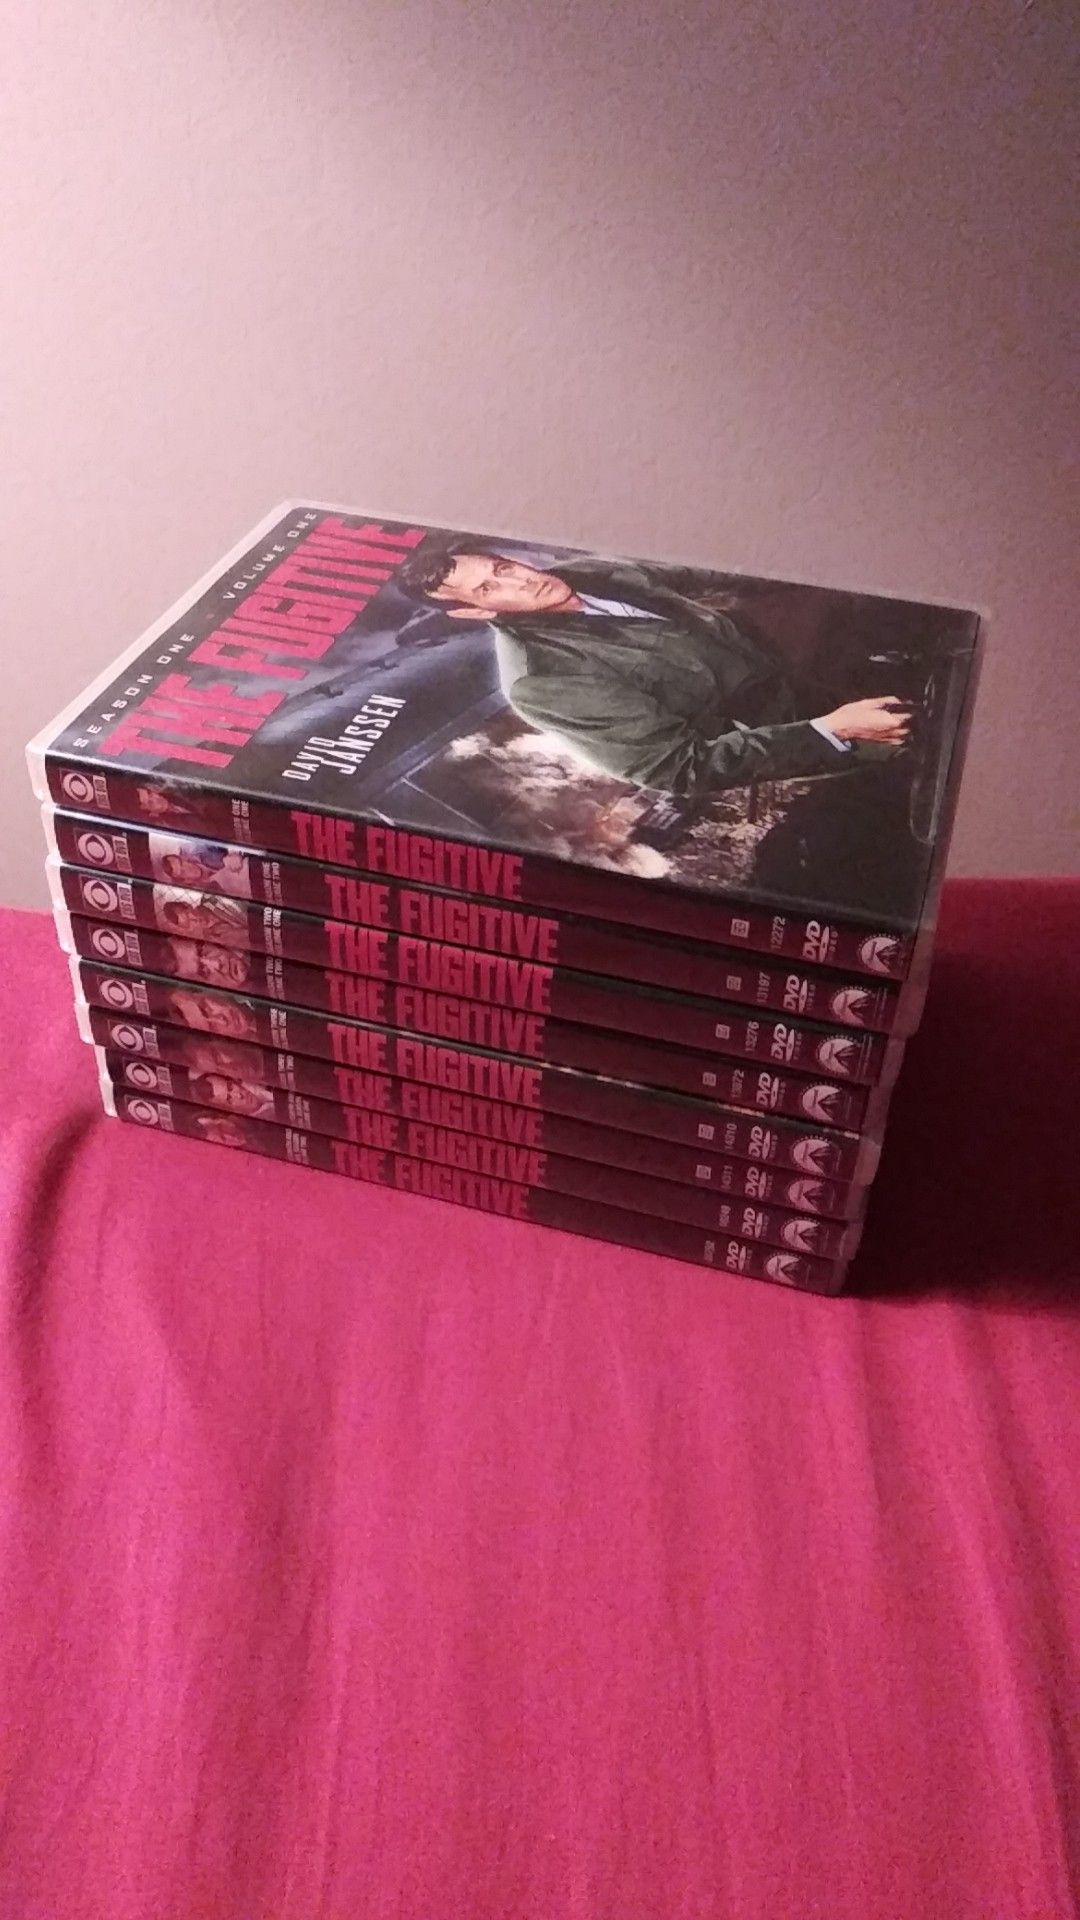 The Fugitive Complete Series Seasons 1 Thru 4